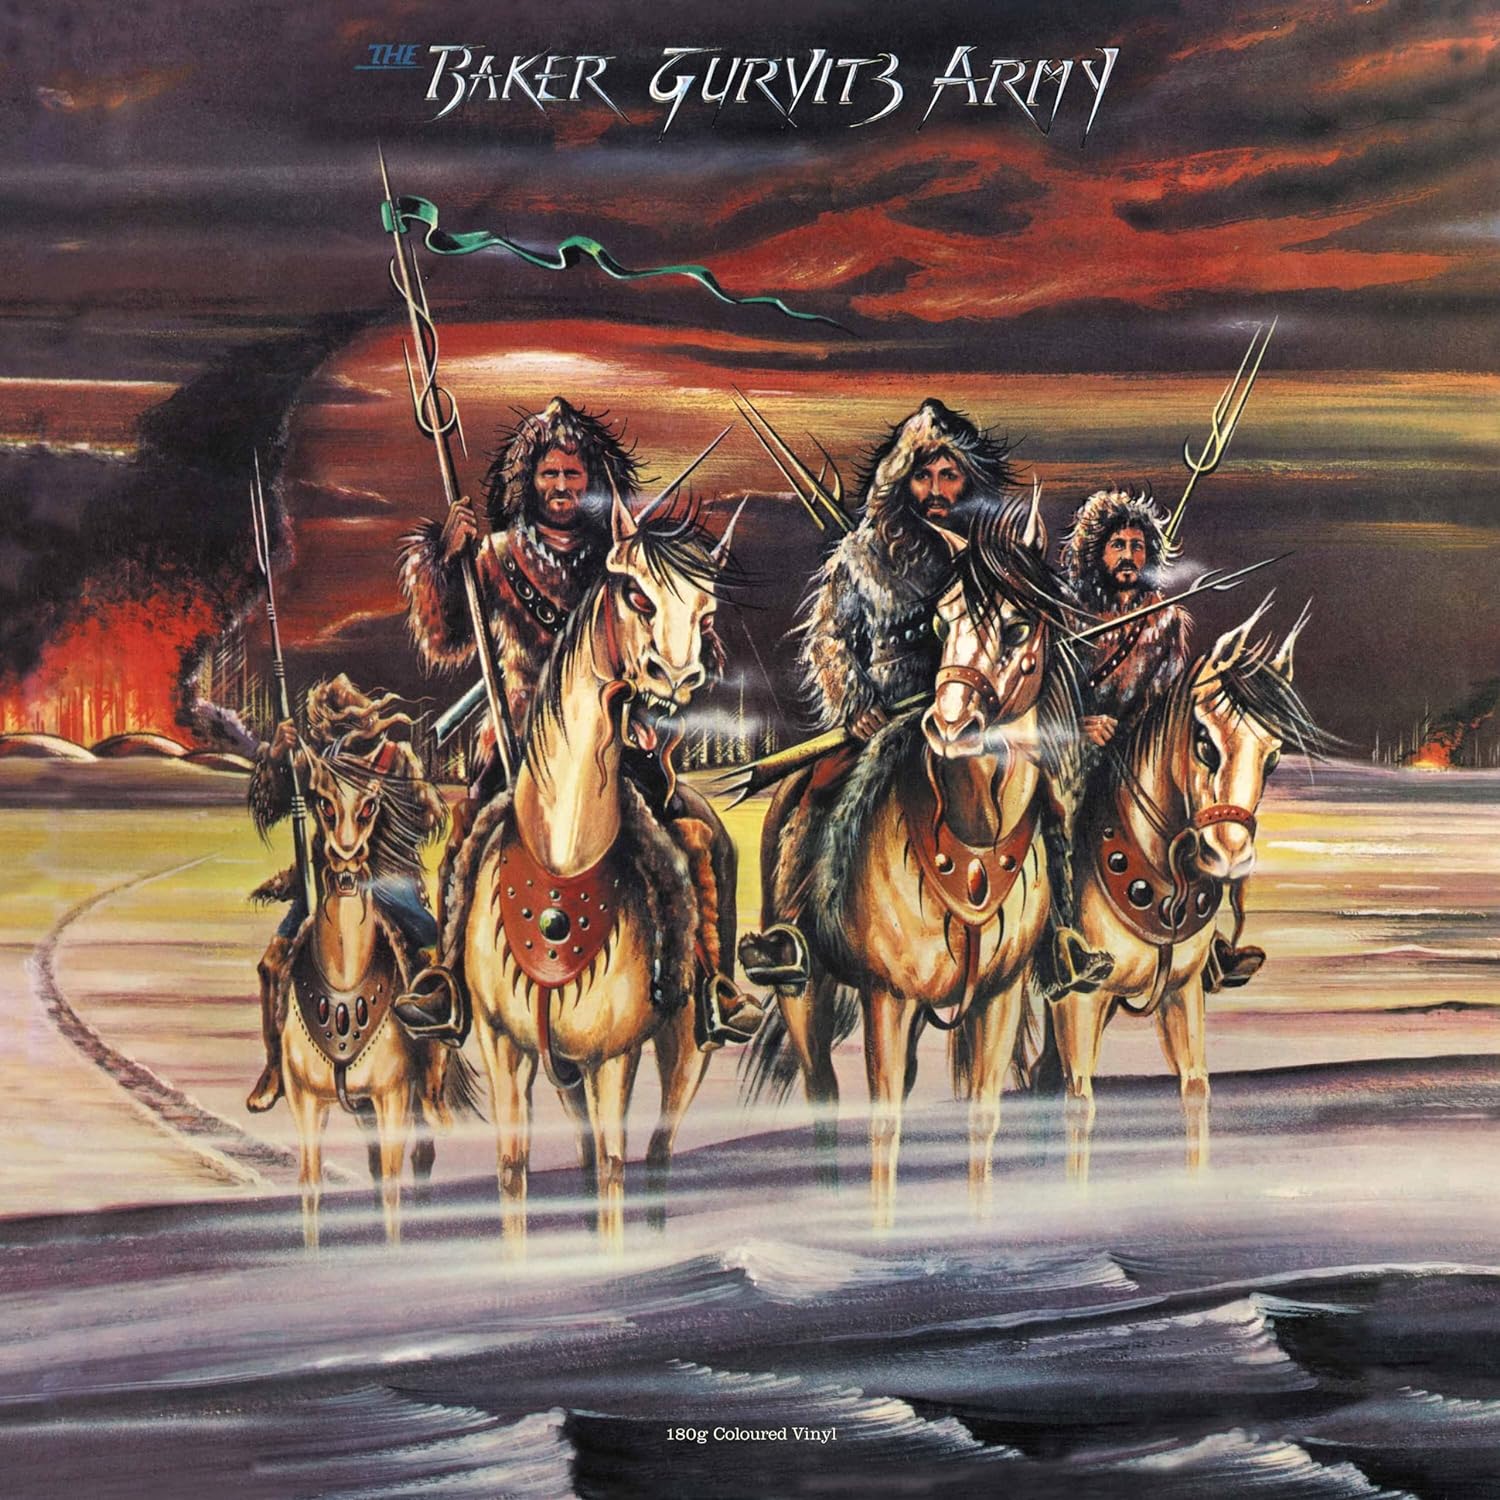 BAKER GURVITZ ARMY – BAKER GURVITZ ARMY LP